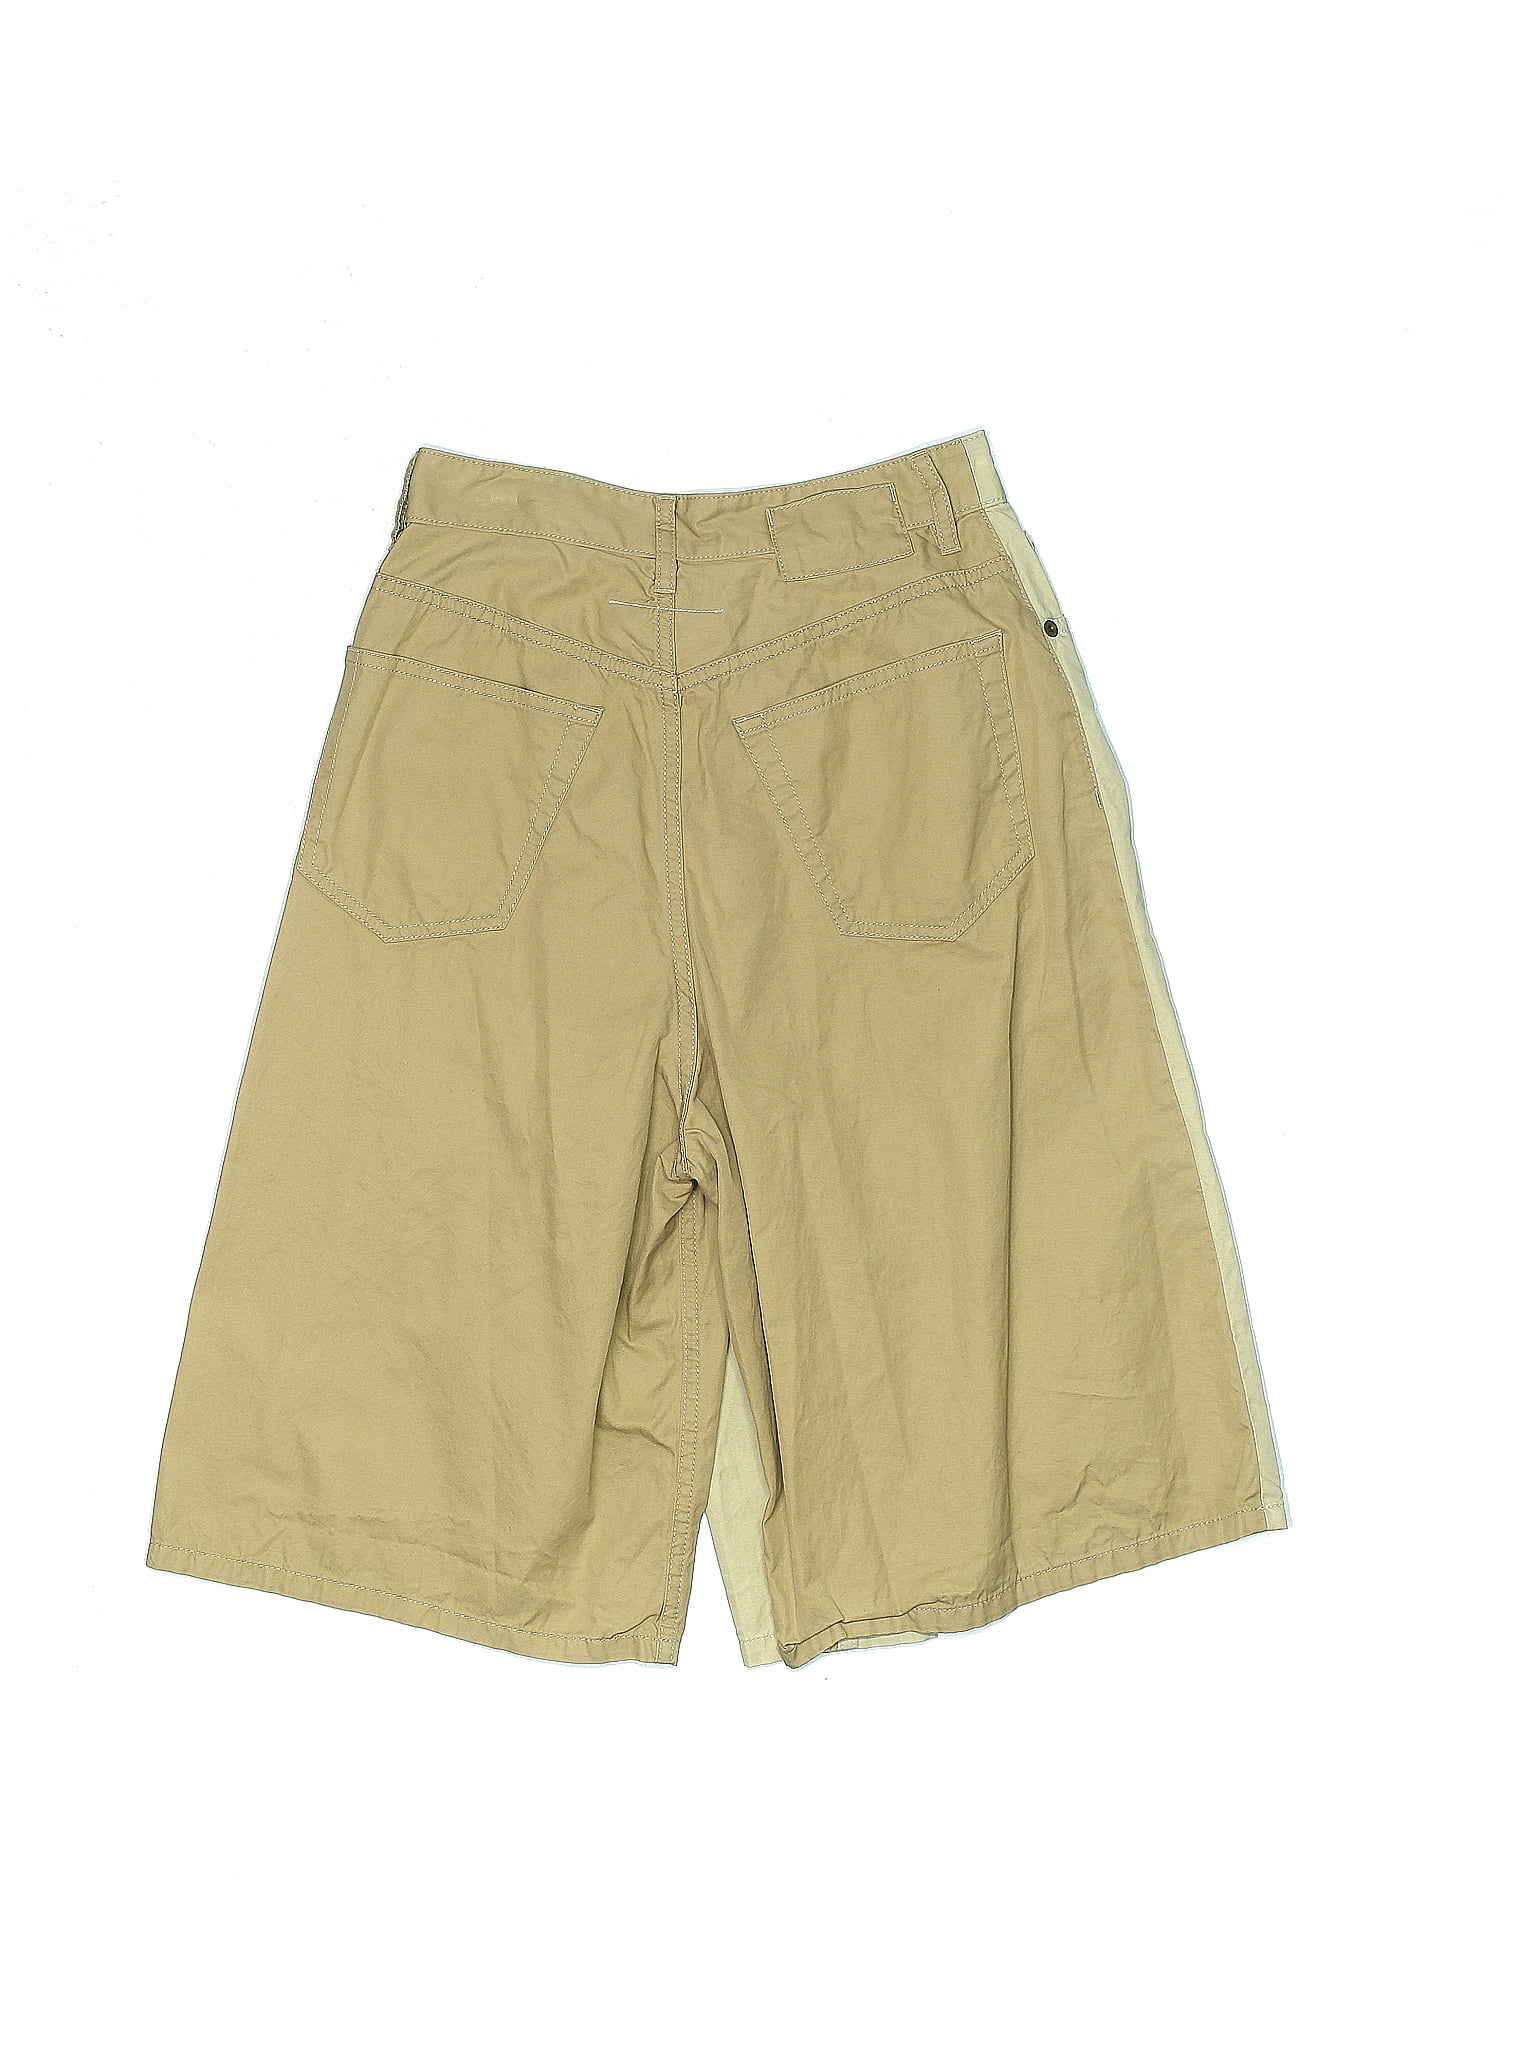 Miu Miu 100% Cotton Solid Tan Khaki Shorts Size 36 (IT) - 79% off